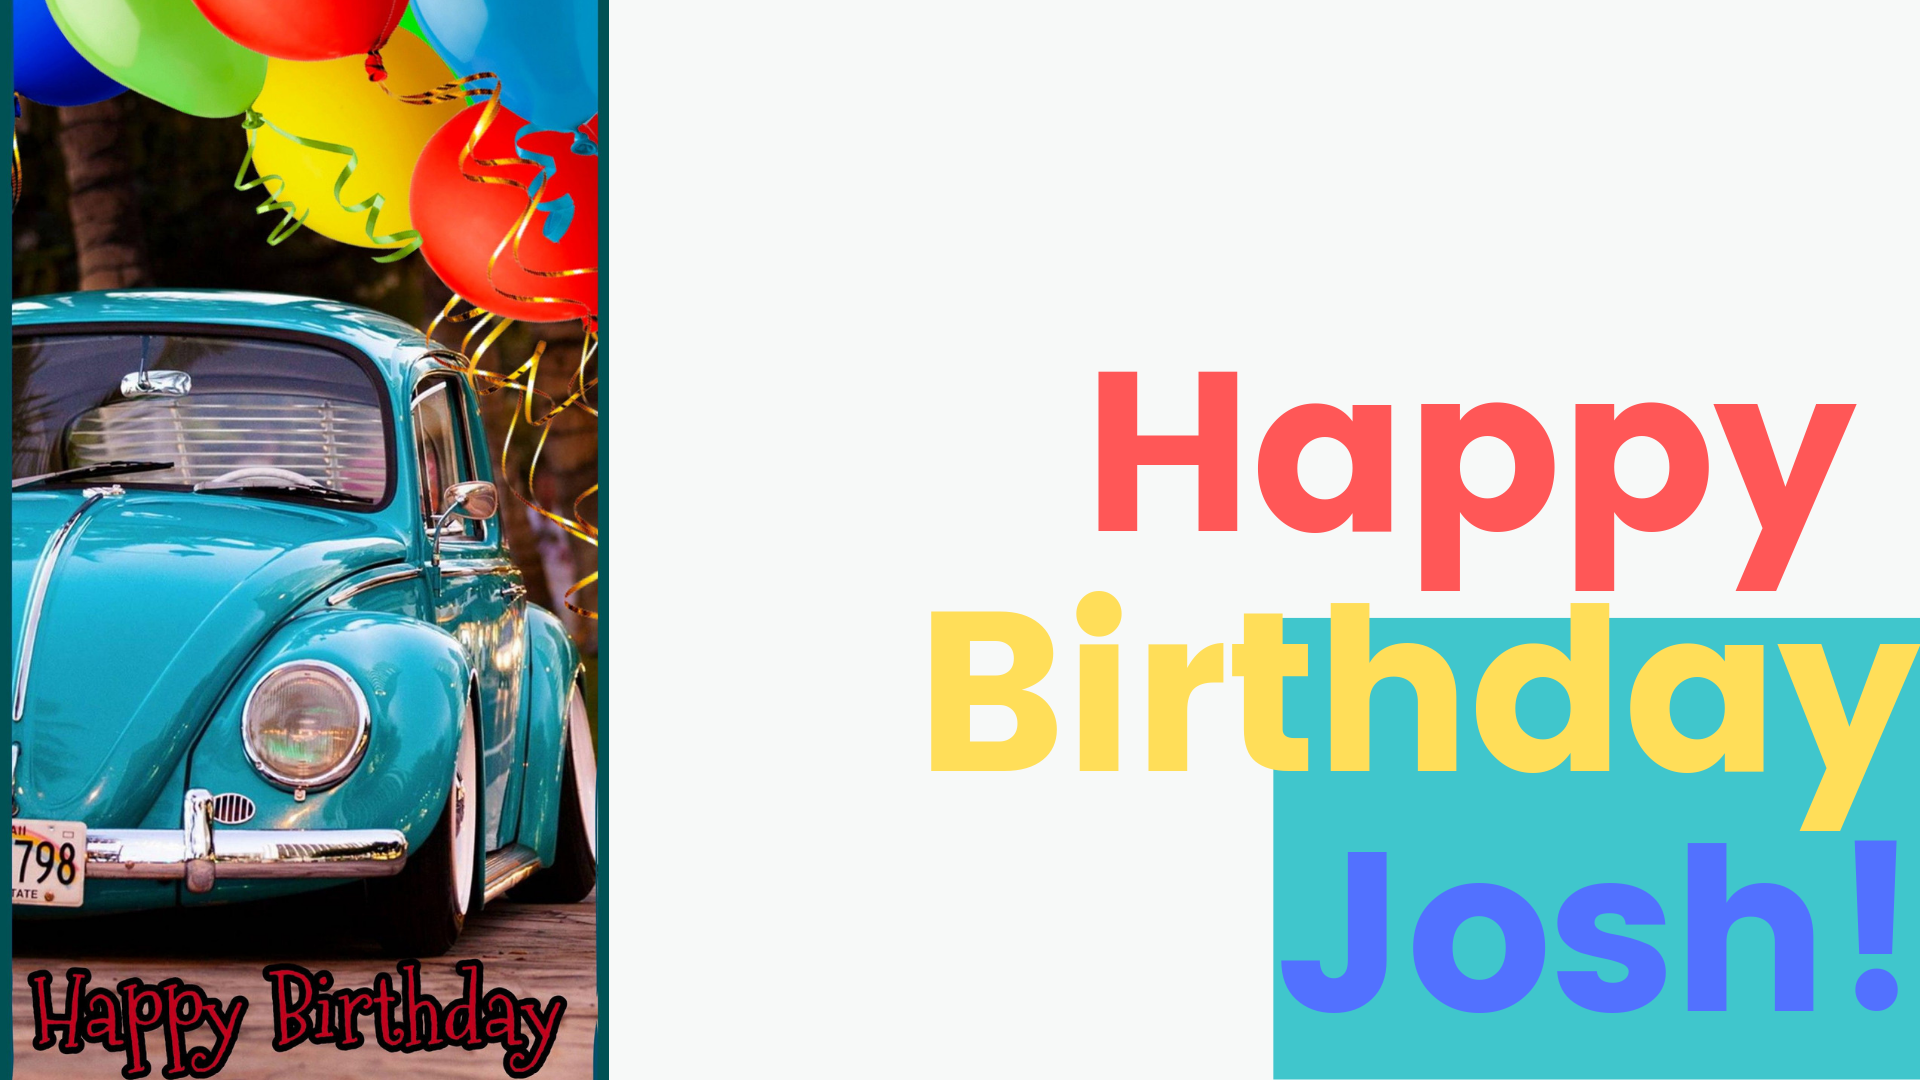 Happy Birthday Josh